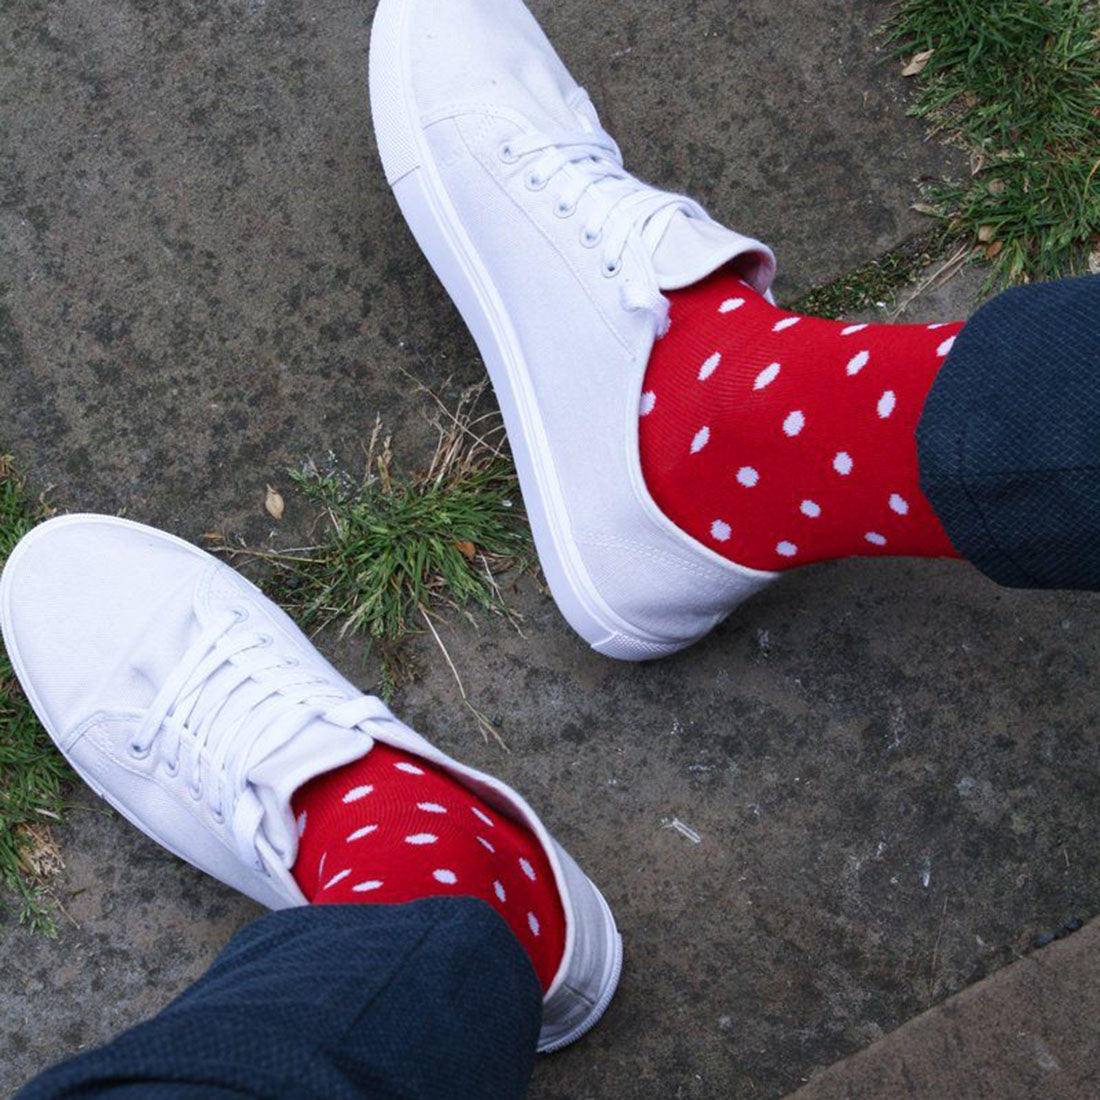 socks-red-polka-dot-bamboo-socks-2_846f10a0-f272-42d5-b180-bb75ef825e9f.jpg